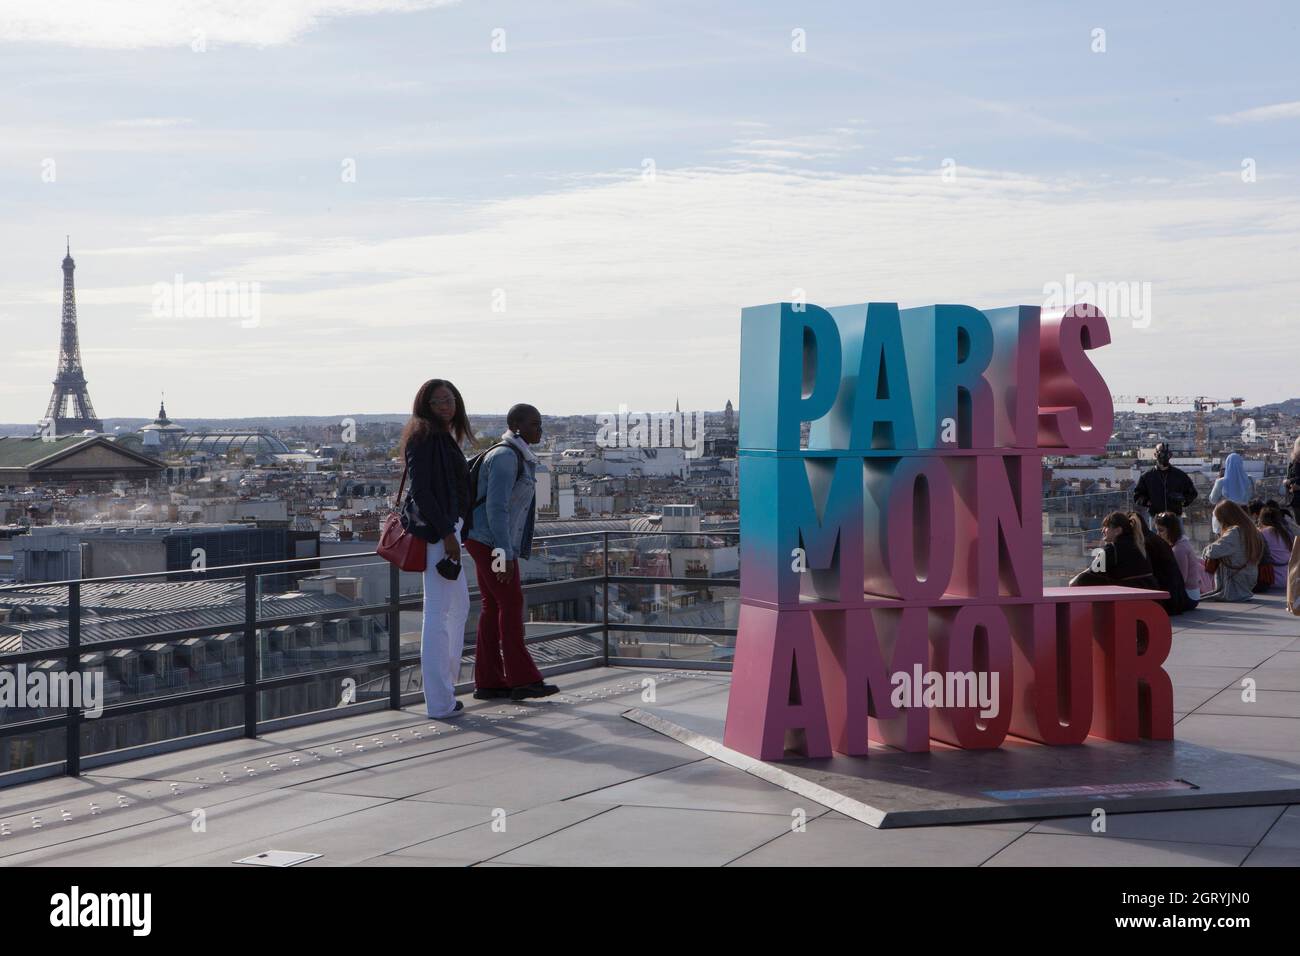 File:Rooftop terrace @ Galeries Lafayette @ Paris (34474933643